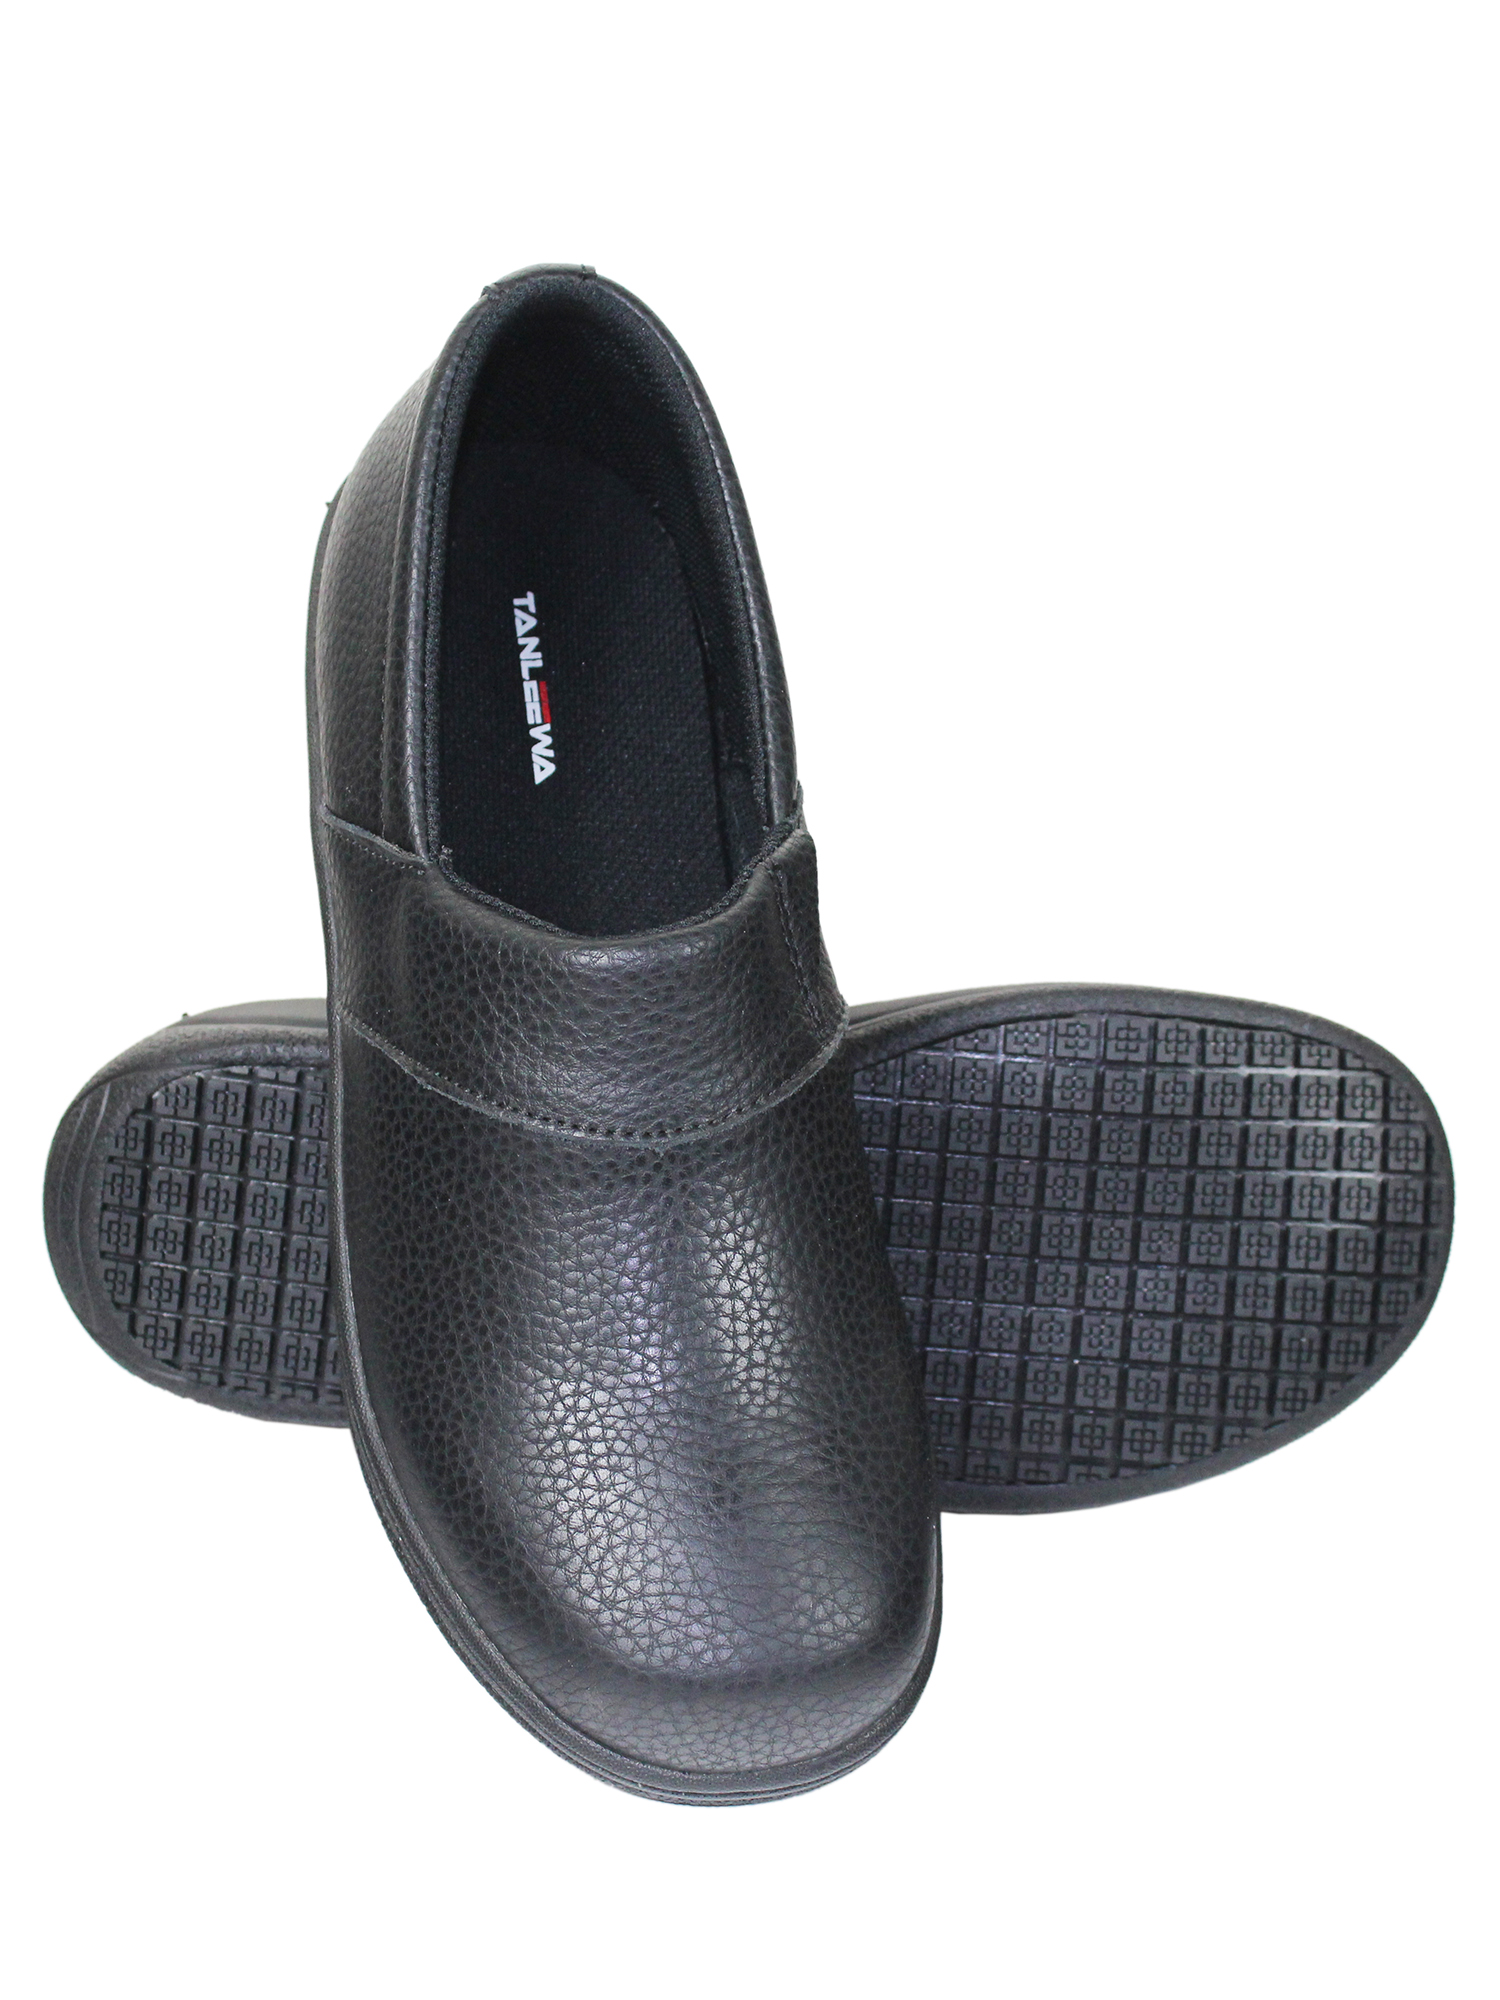 Tanleewa Women's Slip Resistant Work Shoes Waterproof Casual Lightweight Shoe Size 9.5 Adult Male - image 1 of 5